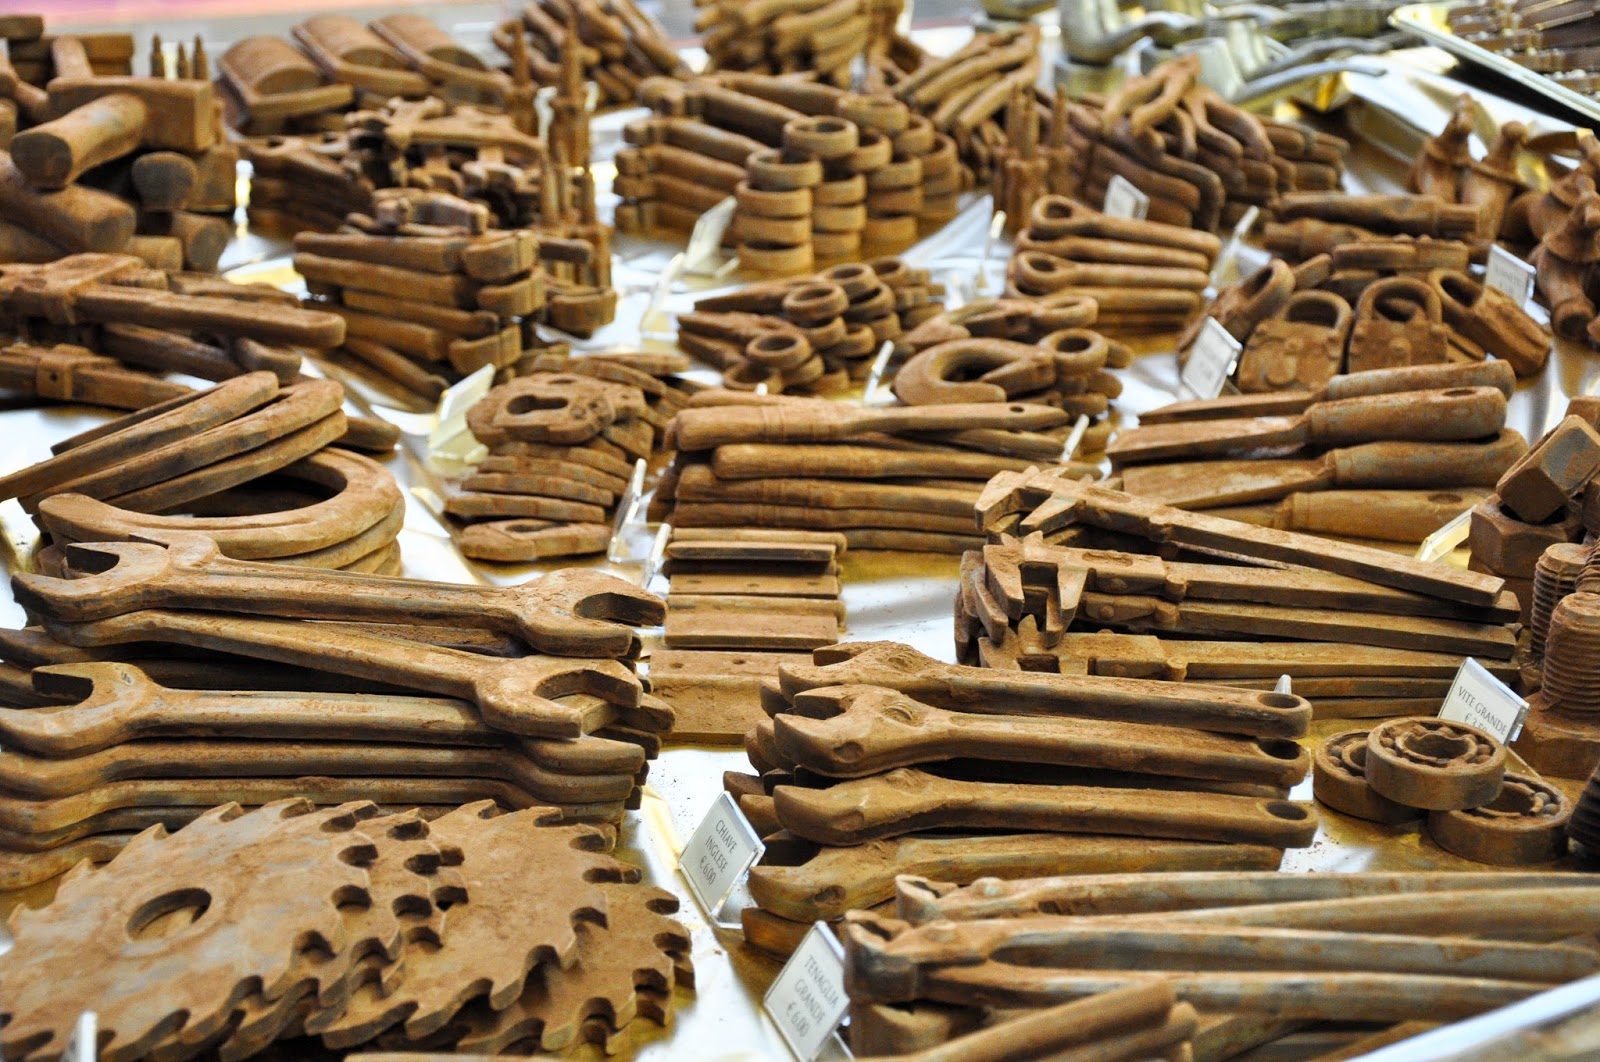 Tools made of chocolate, Chocolate Festival, Piazza dei Signori, Vicenza, Veneto, Italy